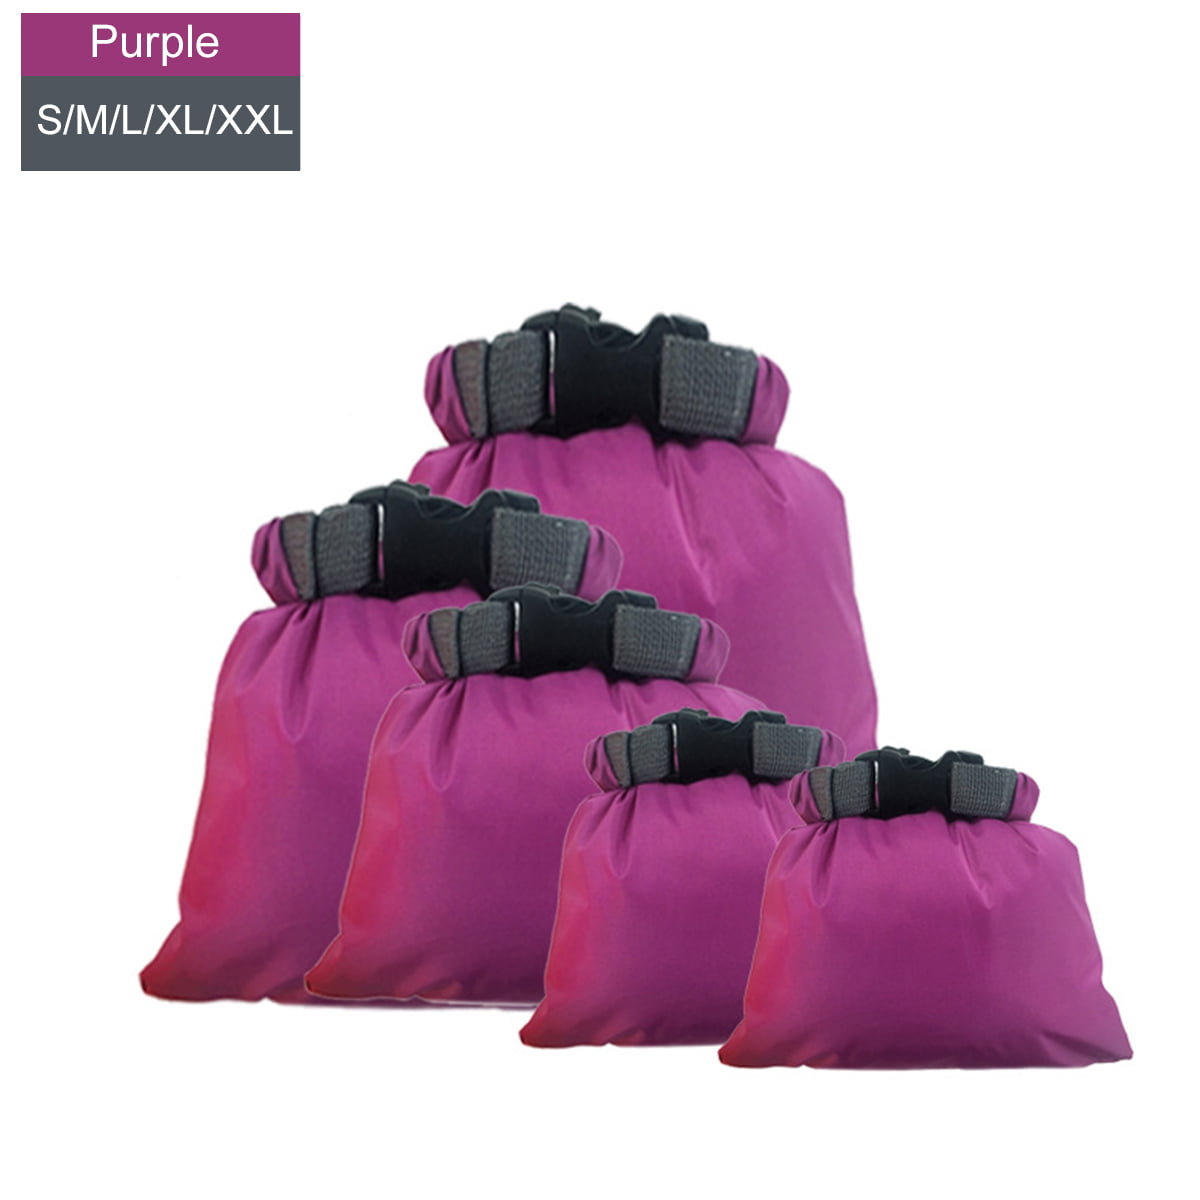 5 PCS Waterproof Bag Set Storage Roll Top Dry Bag Set for Skating Camping Travel 